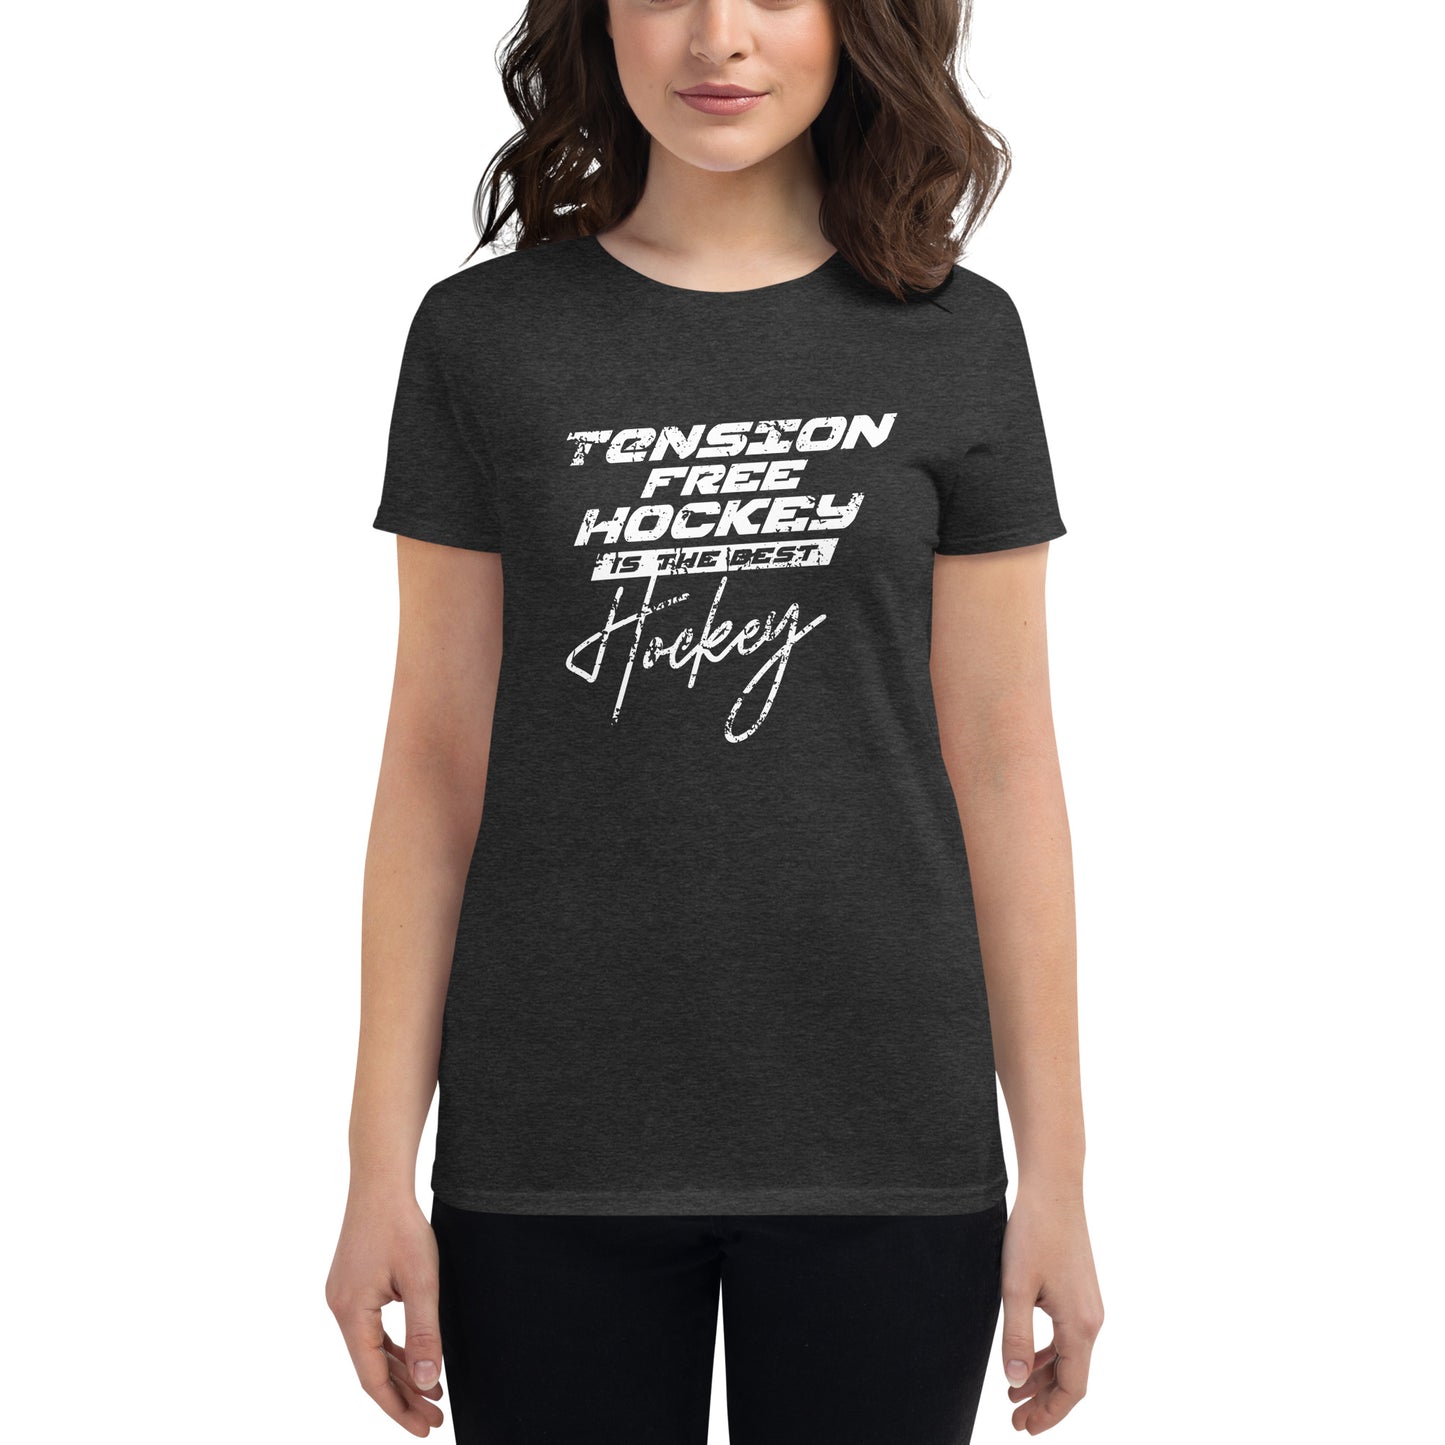 Tension Free Hockey is the Best Hockey - Women's T-Shirt